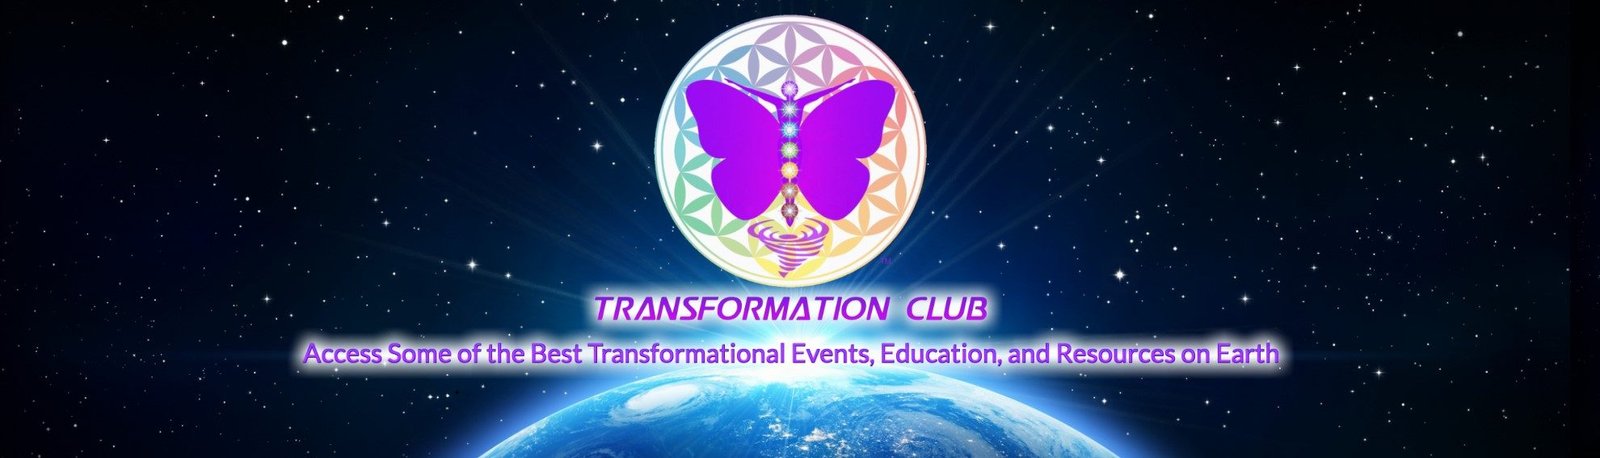 The Transformation Club